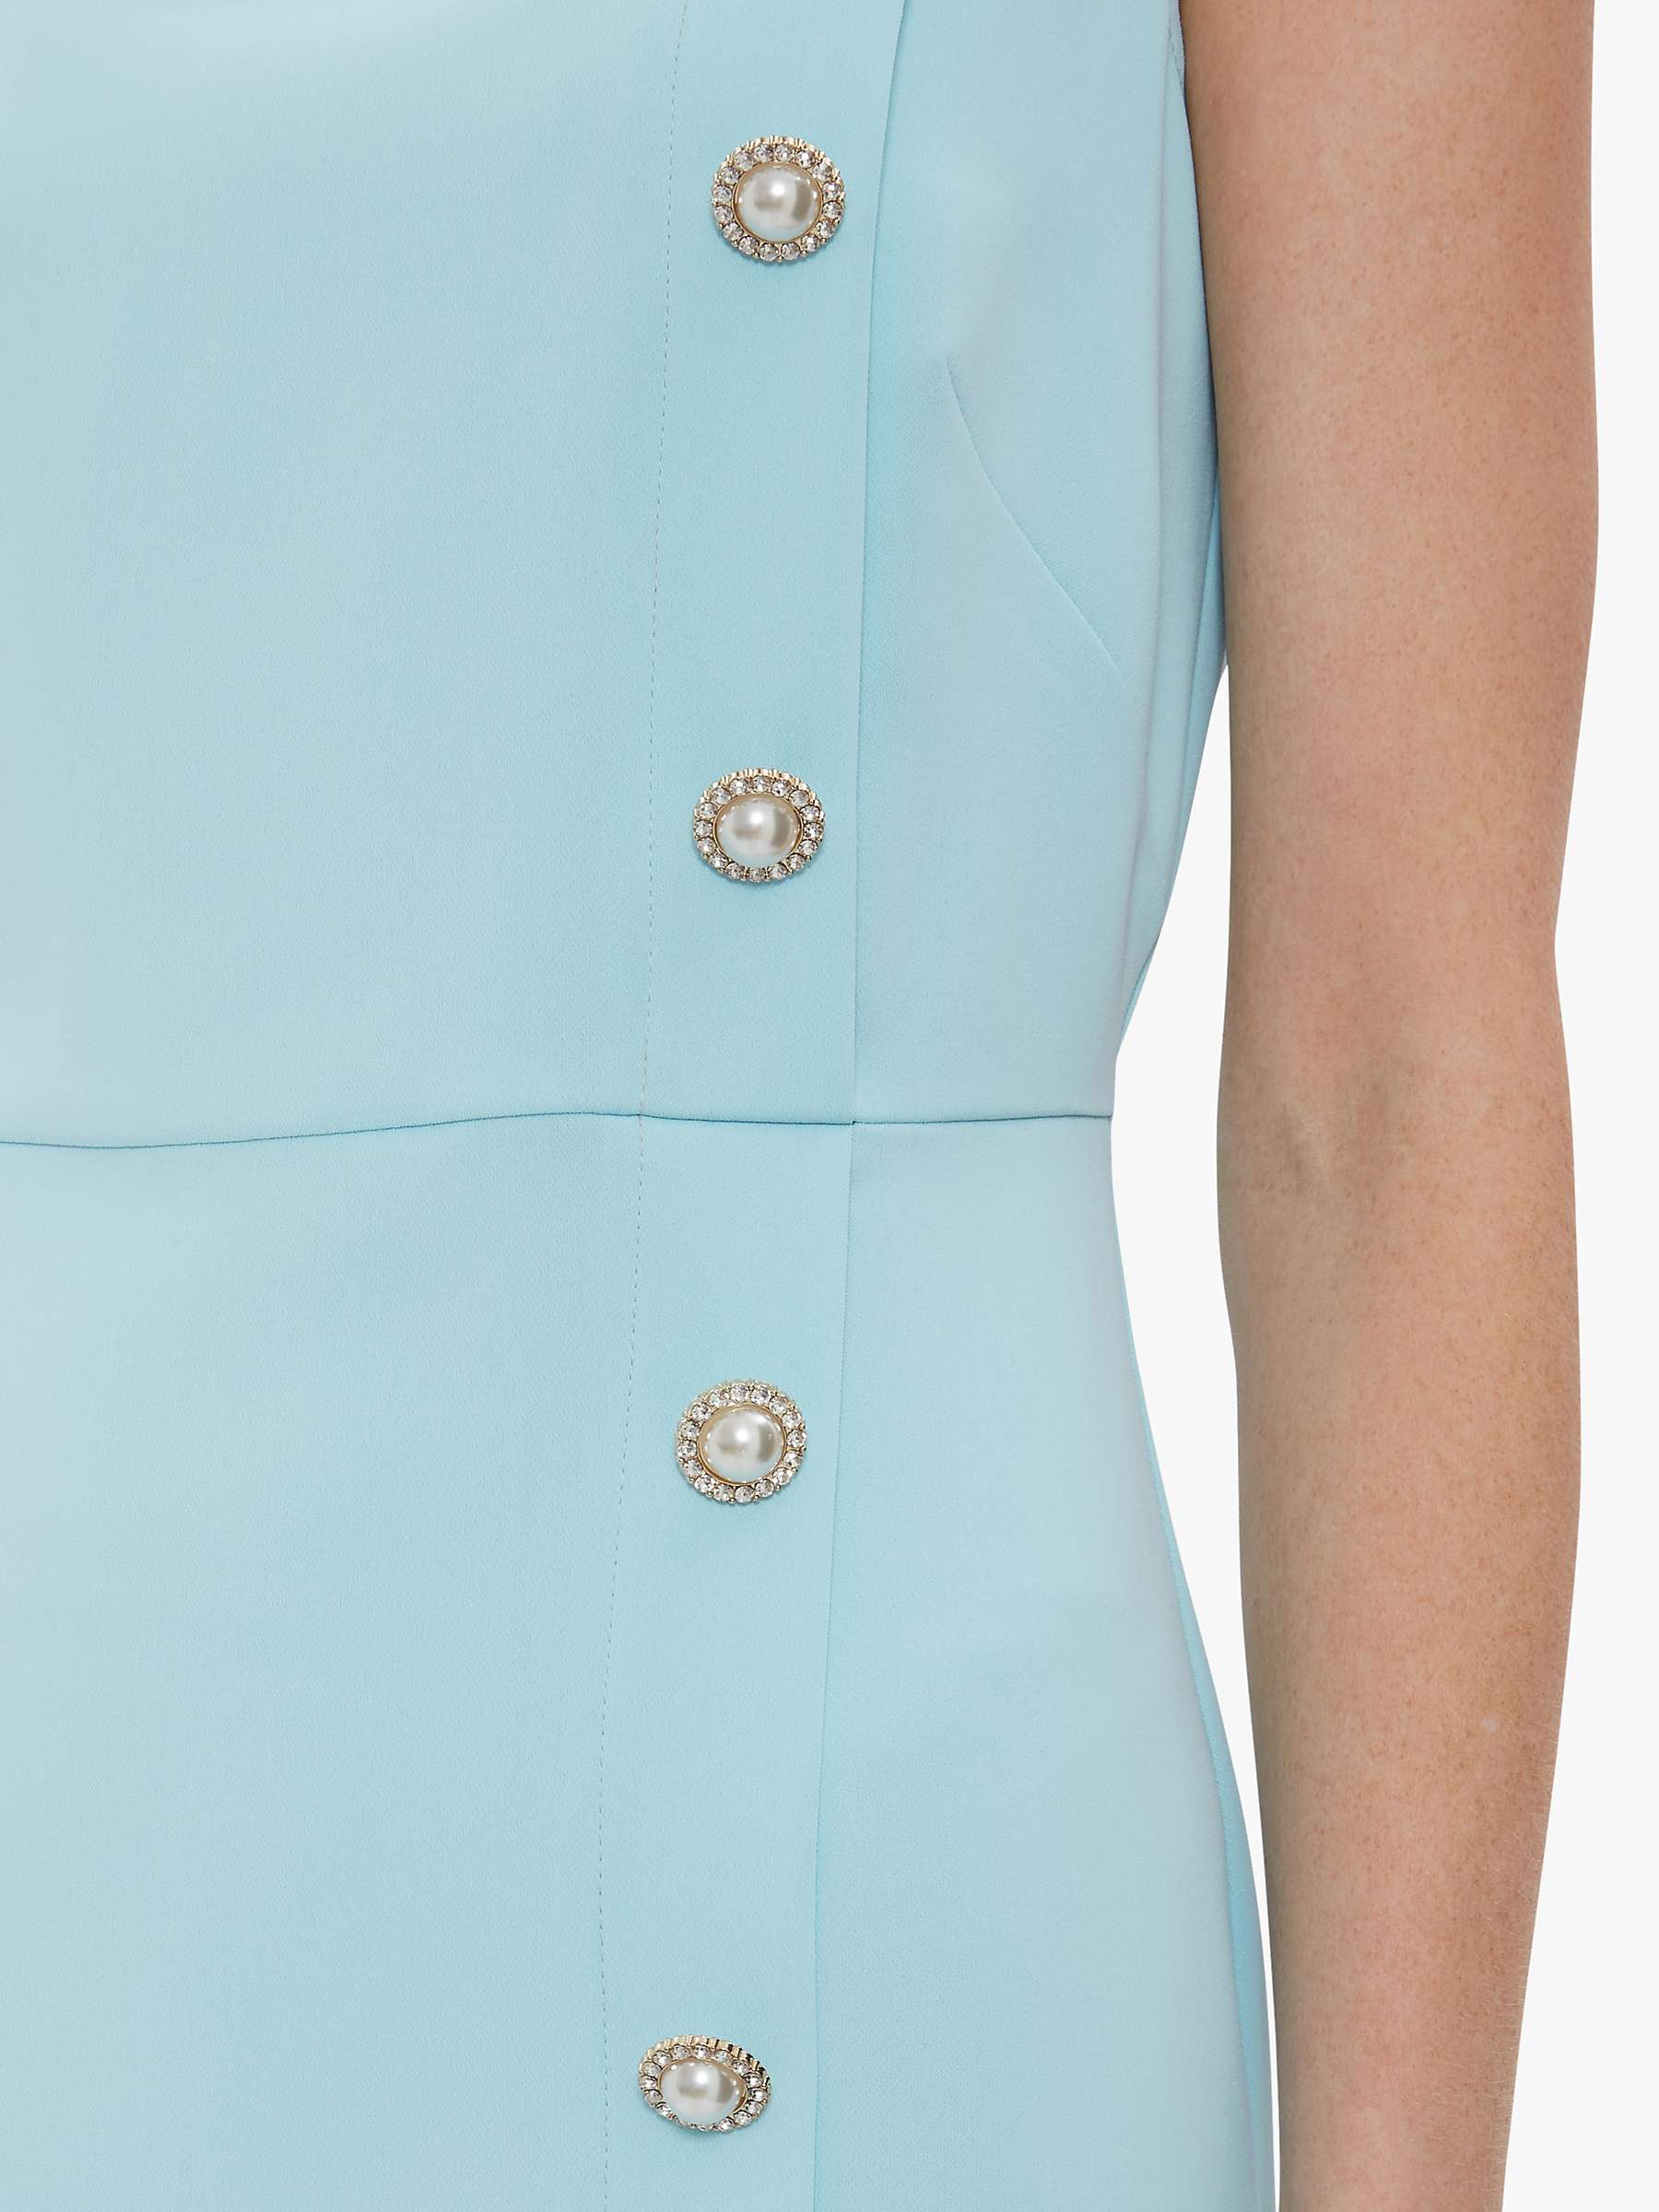 Buy Gina Bacconi Mykia Button Midi Dress, Ice Blue Online at johnlewis.com